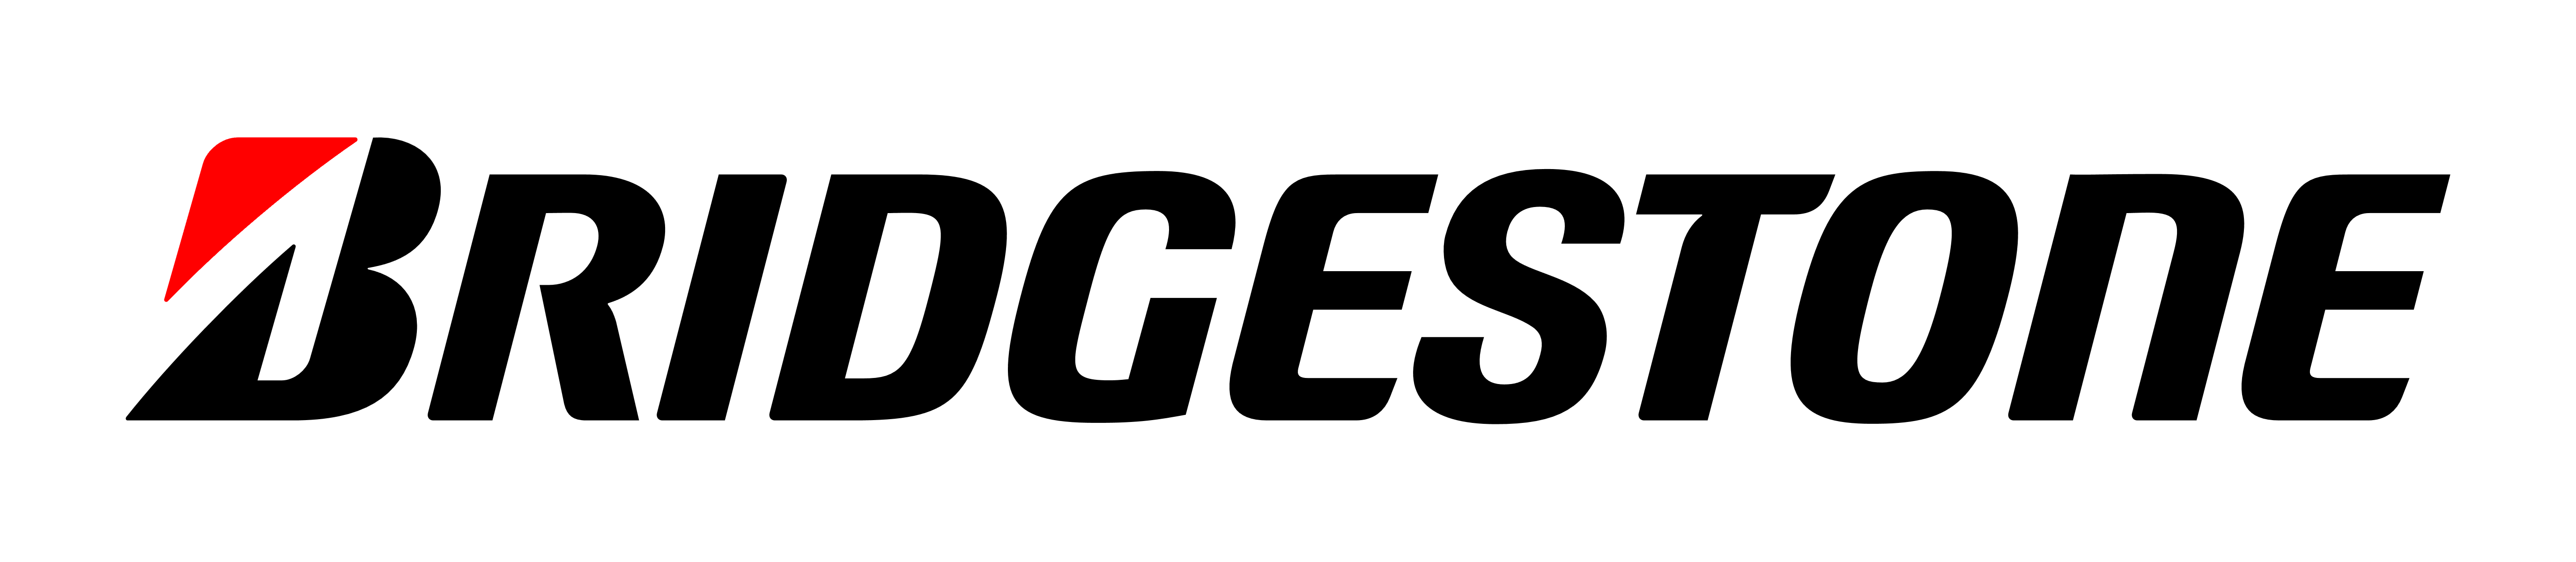 Bridgestone Logo, Png, Meanin